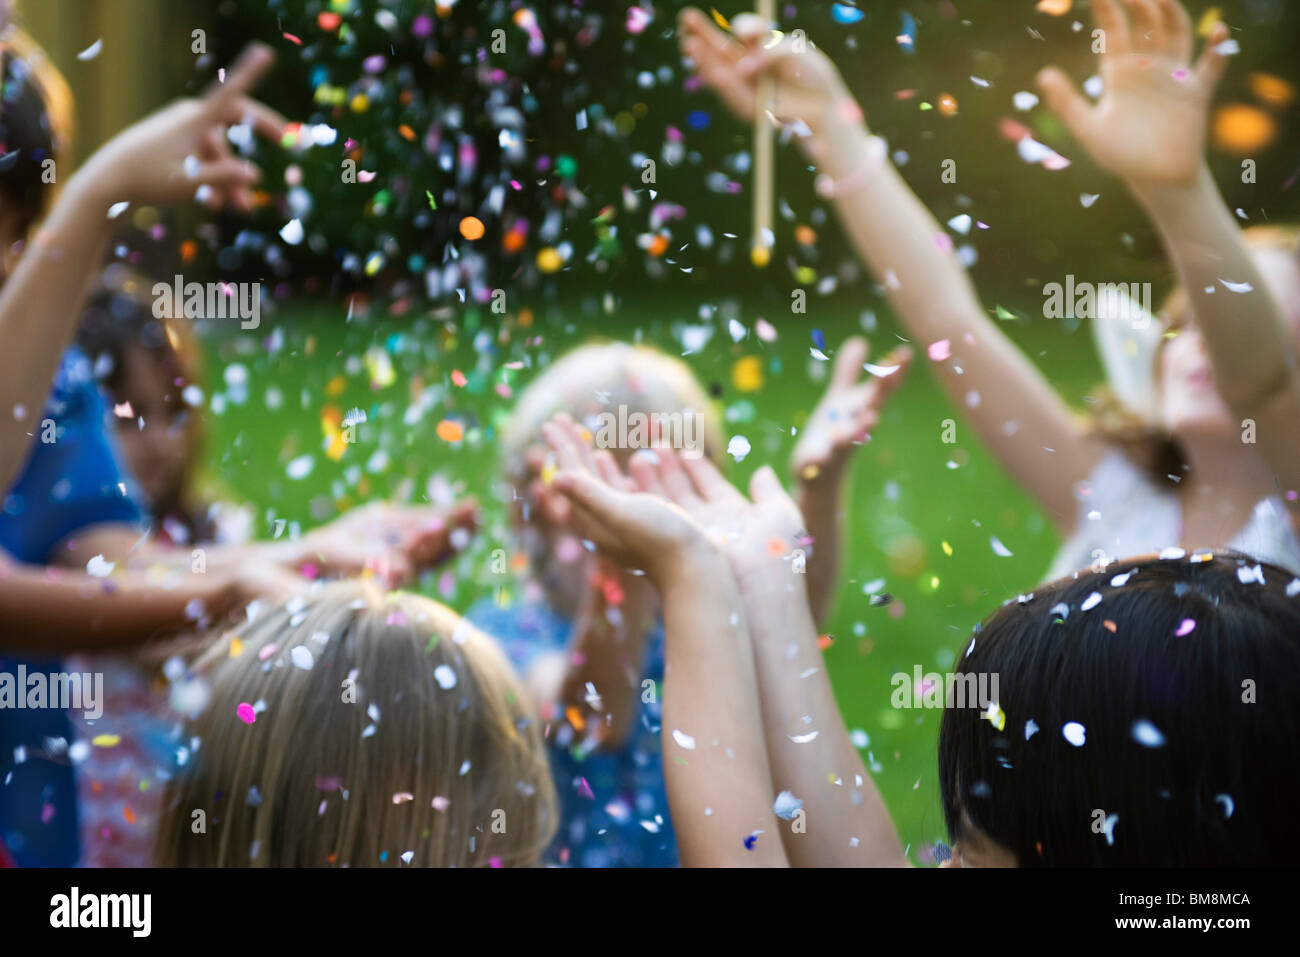 Children showered in falling confetti Stock Photo